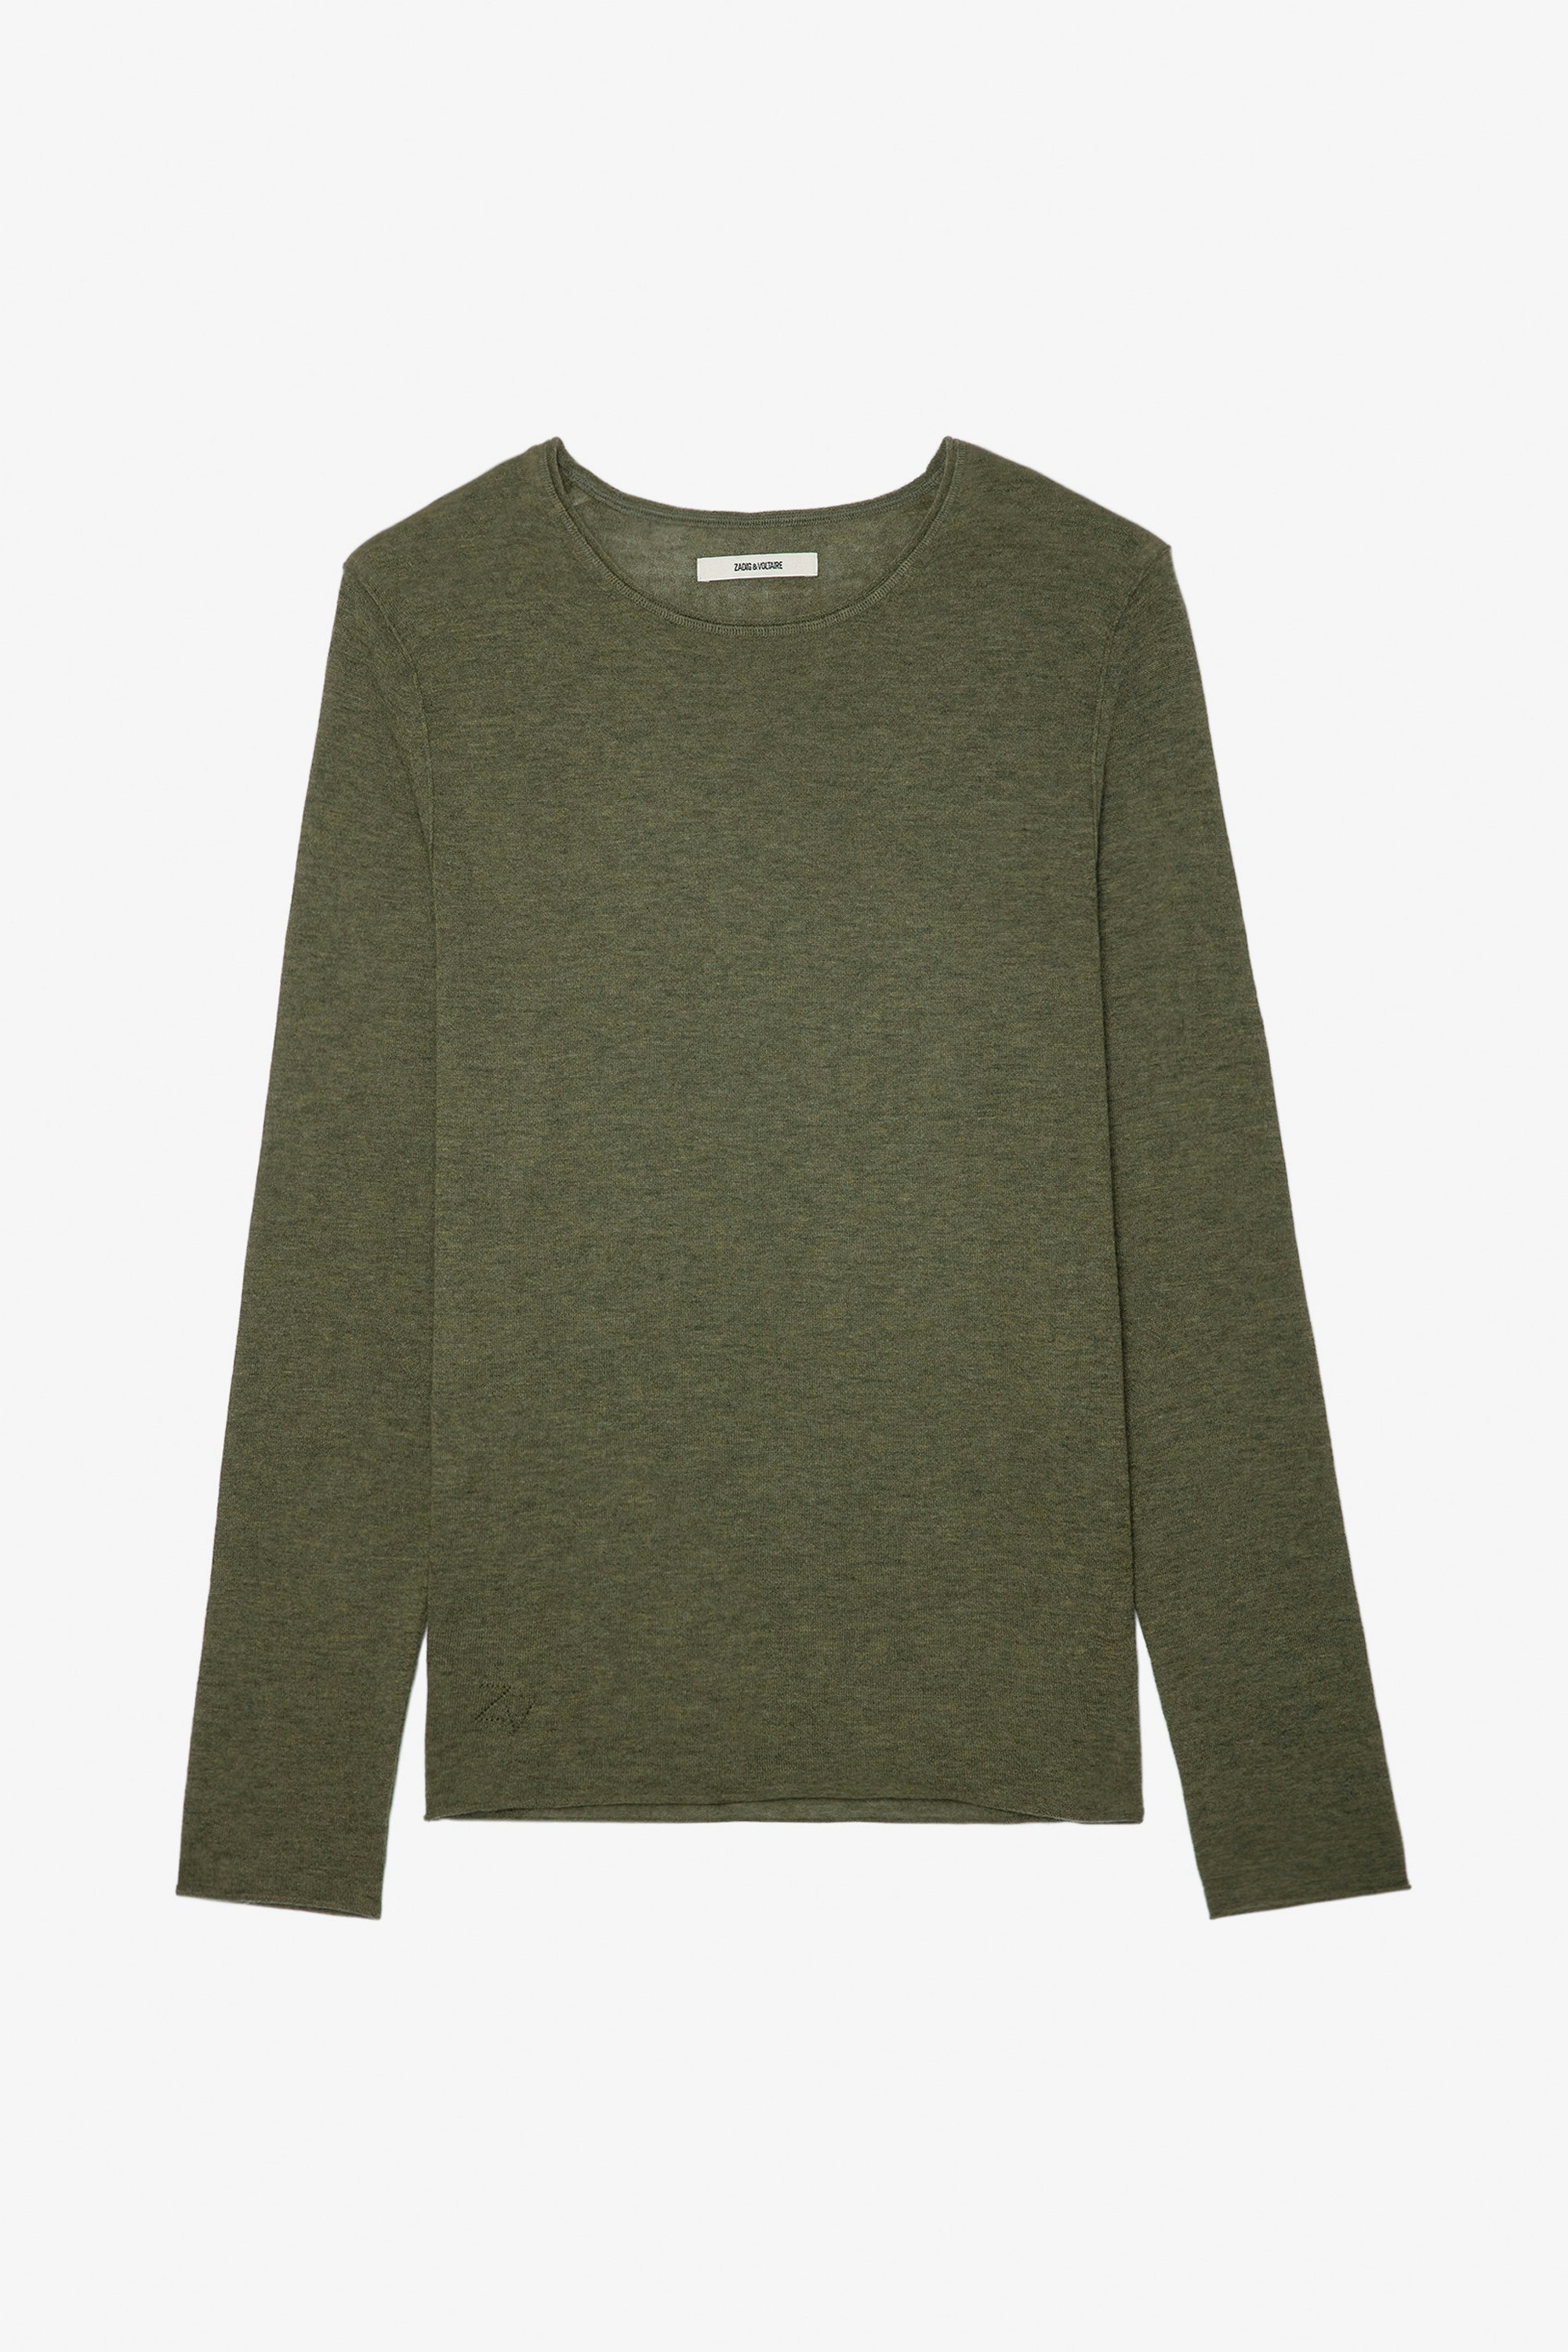 Teiss Cashmere Jumper - Men’s khaki feather cashmere sweater.